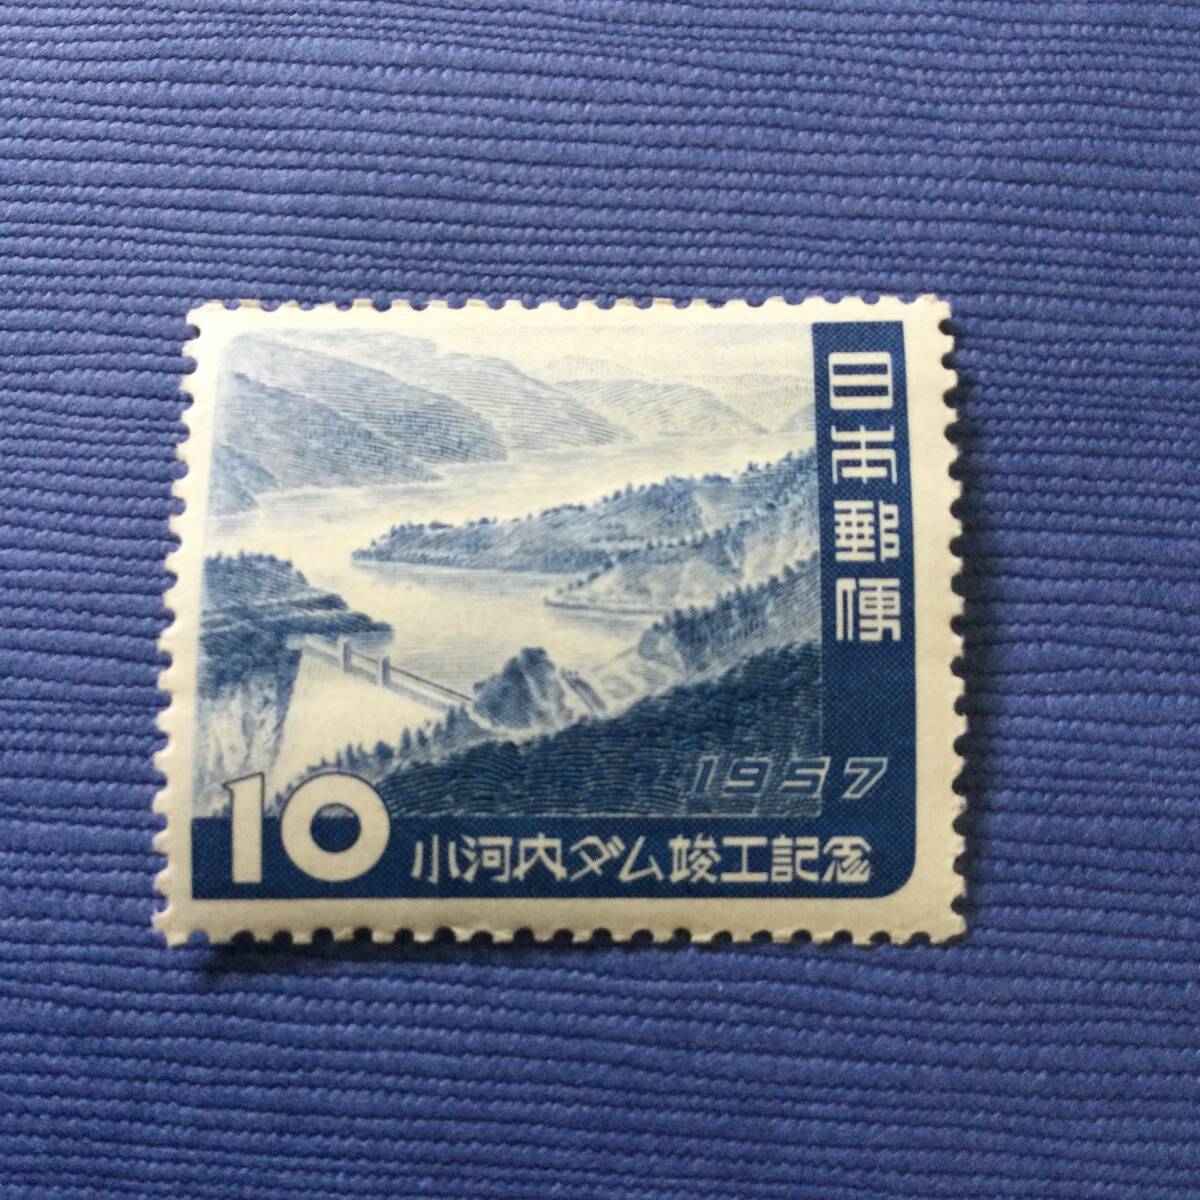 小河内ダム竣工記念切手 1957年 10円_画像1